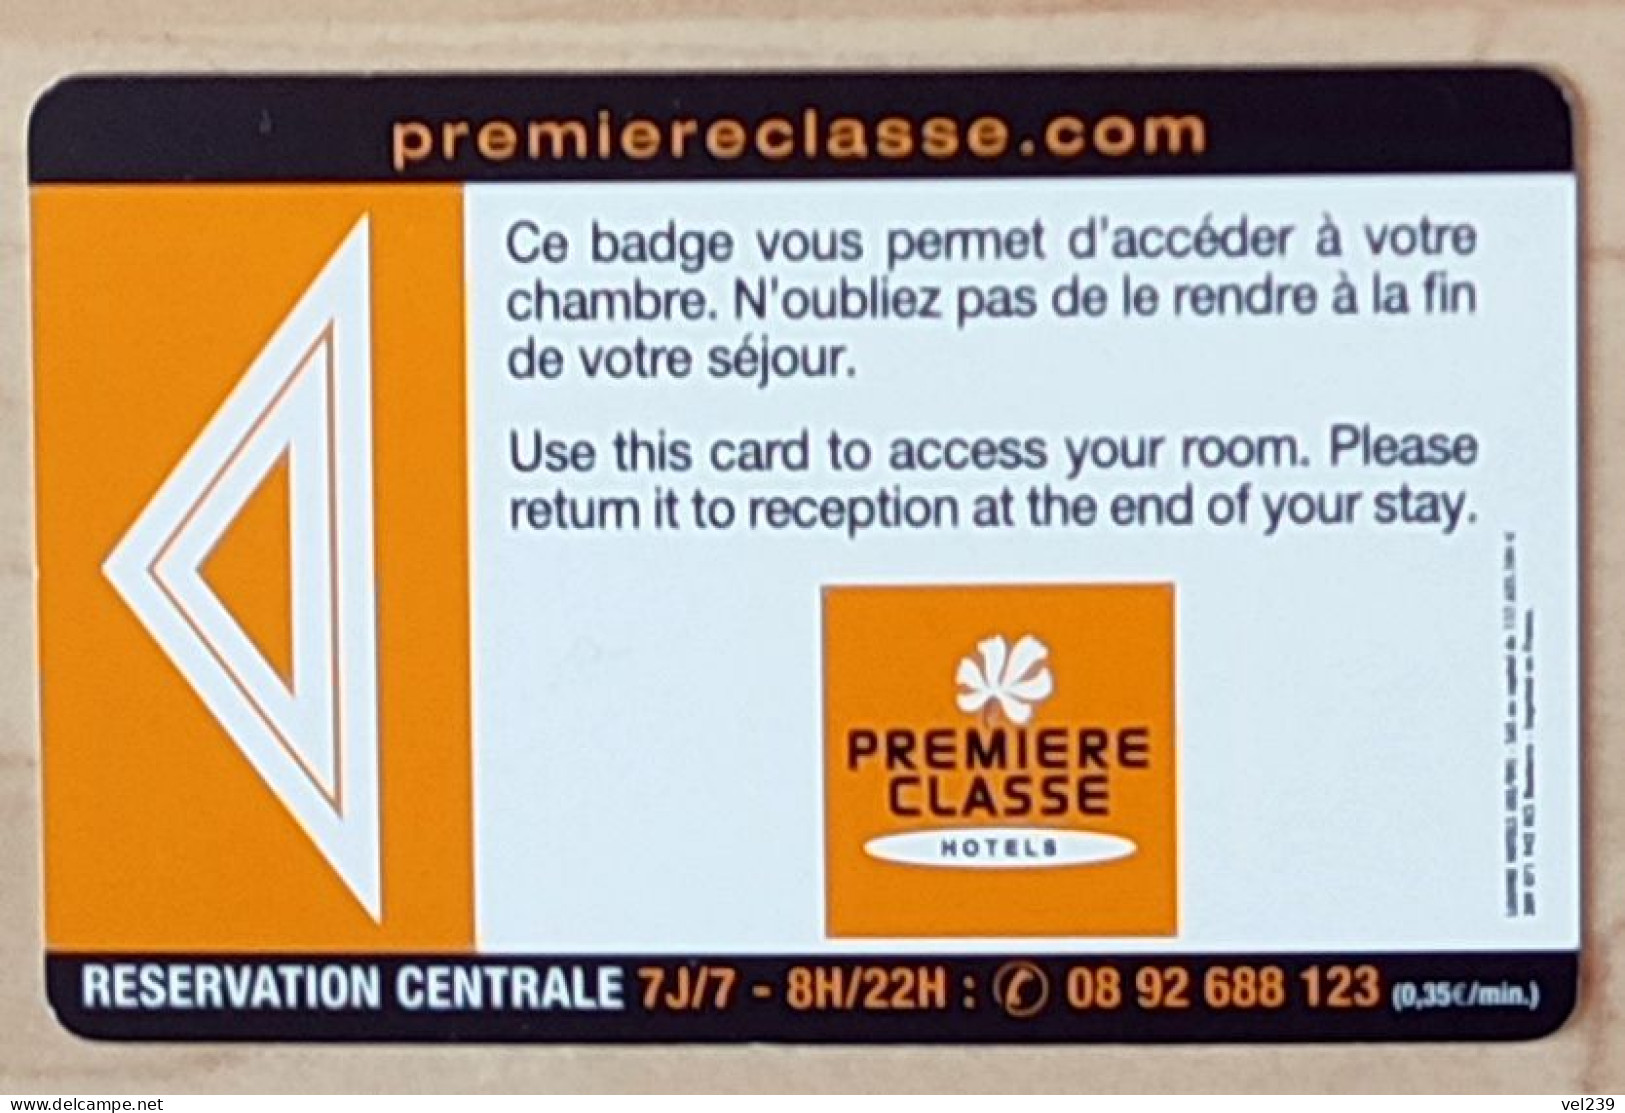 Premiere Classe - Hotel Keycards